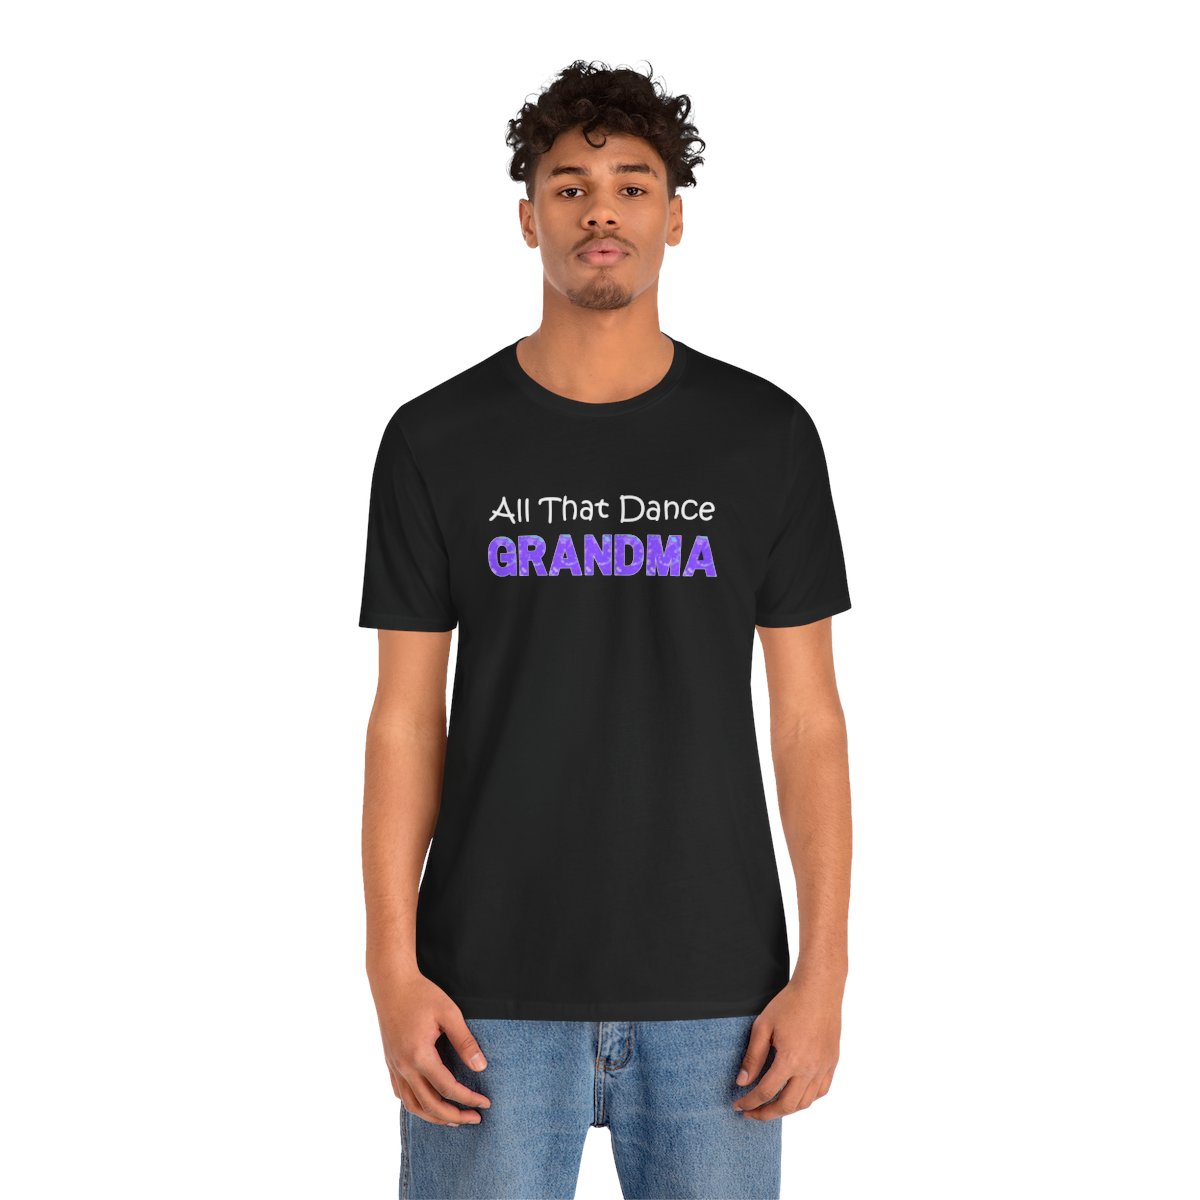 All That Dance Grandma Tshirt product thumbnail image